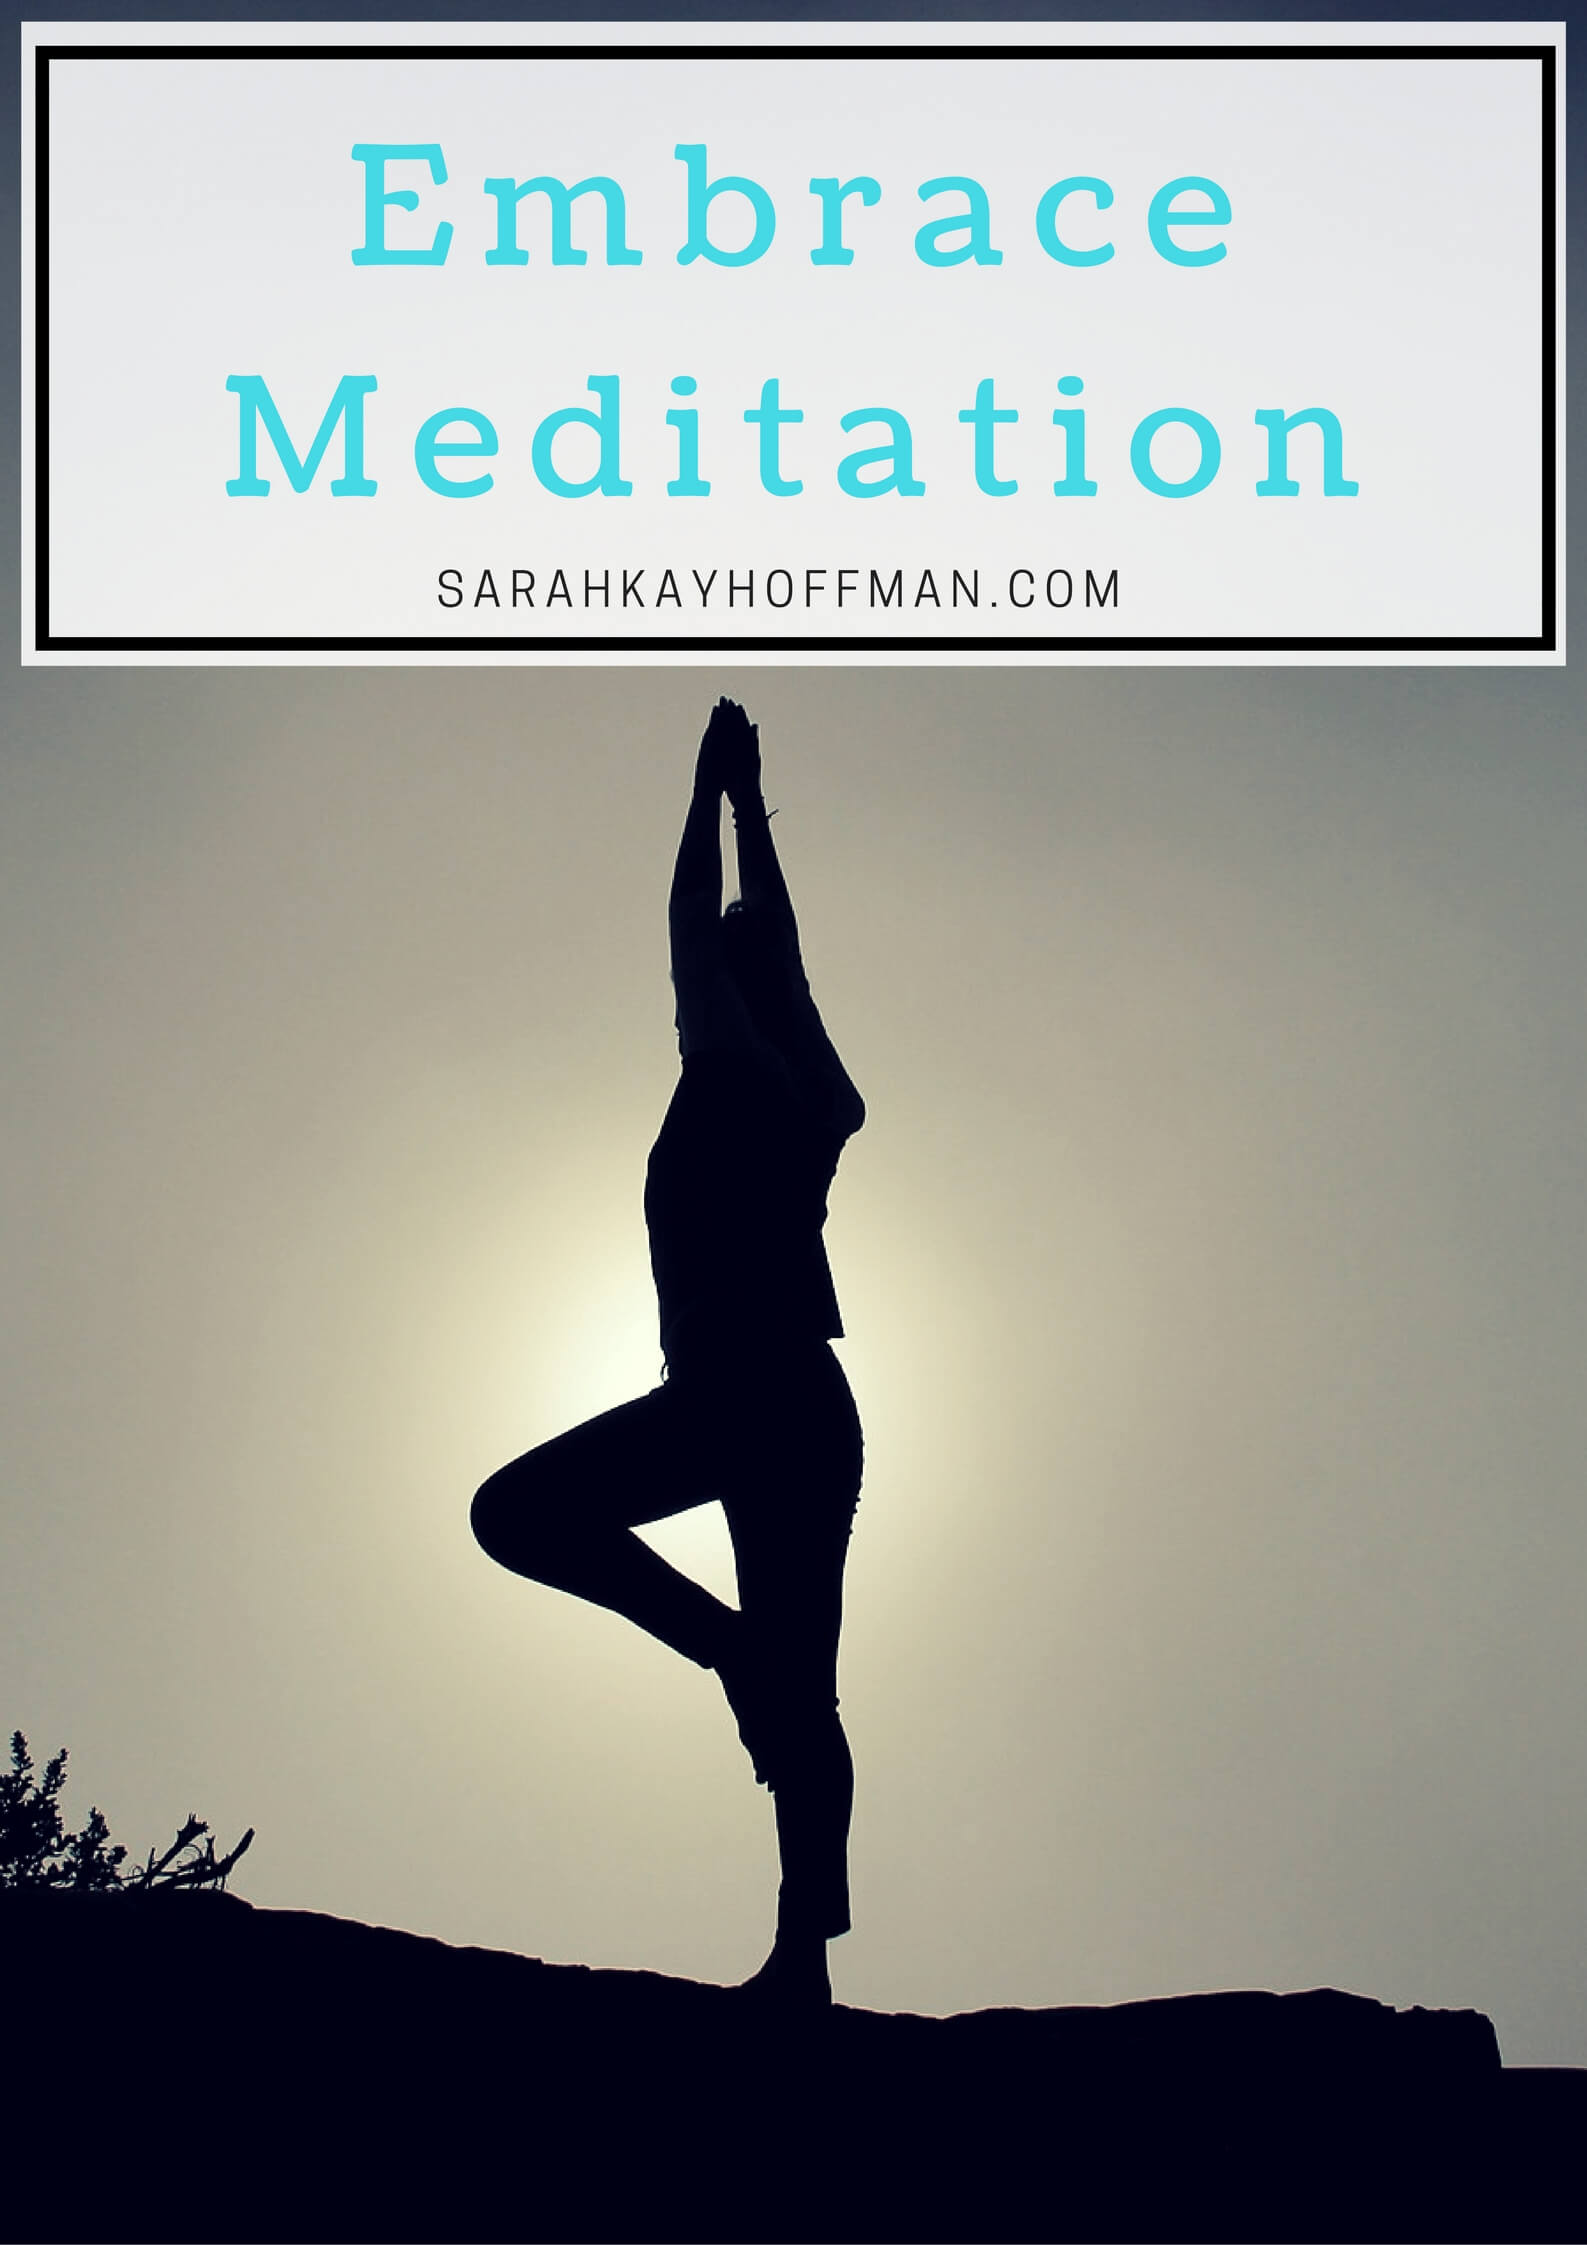 Embrace Meditation sarahkayhoffman.com